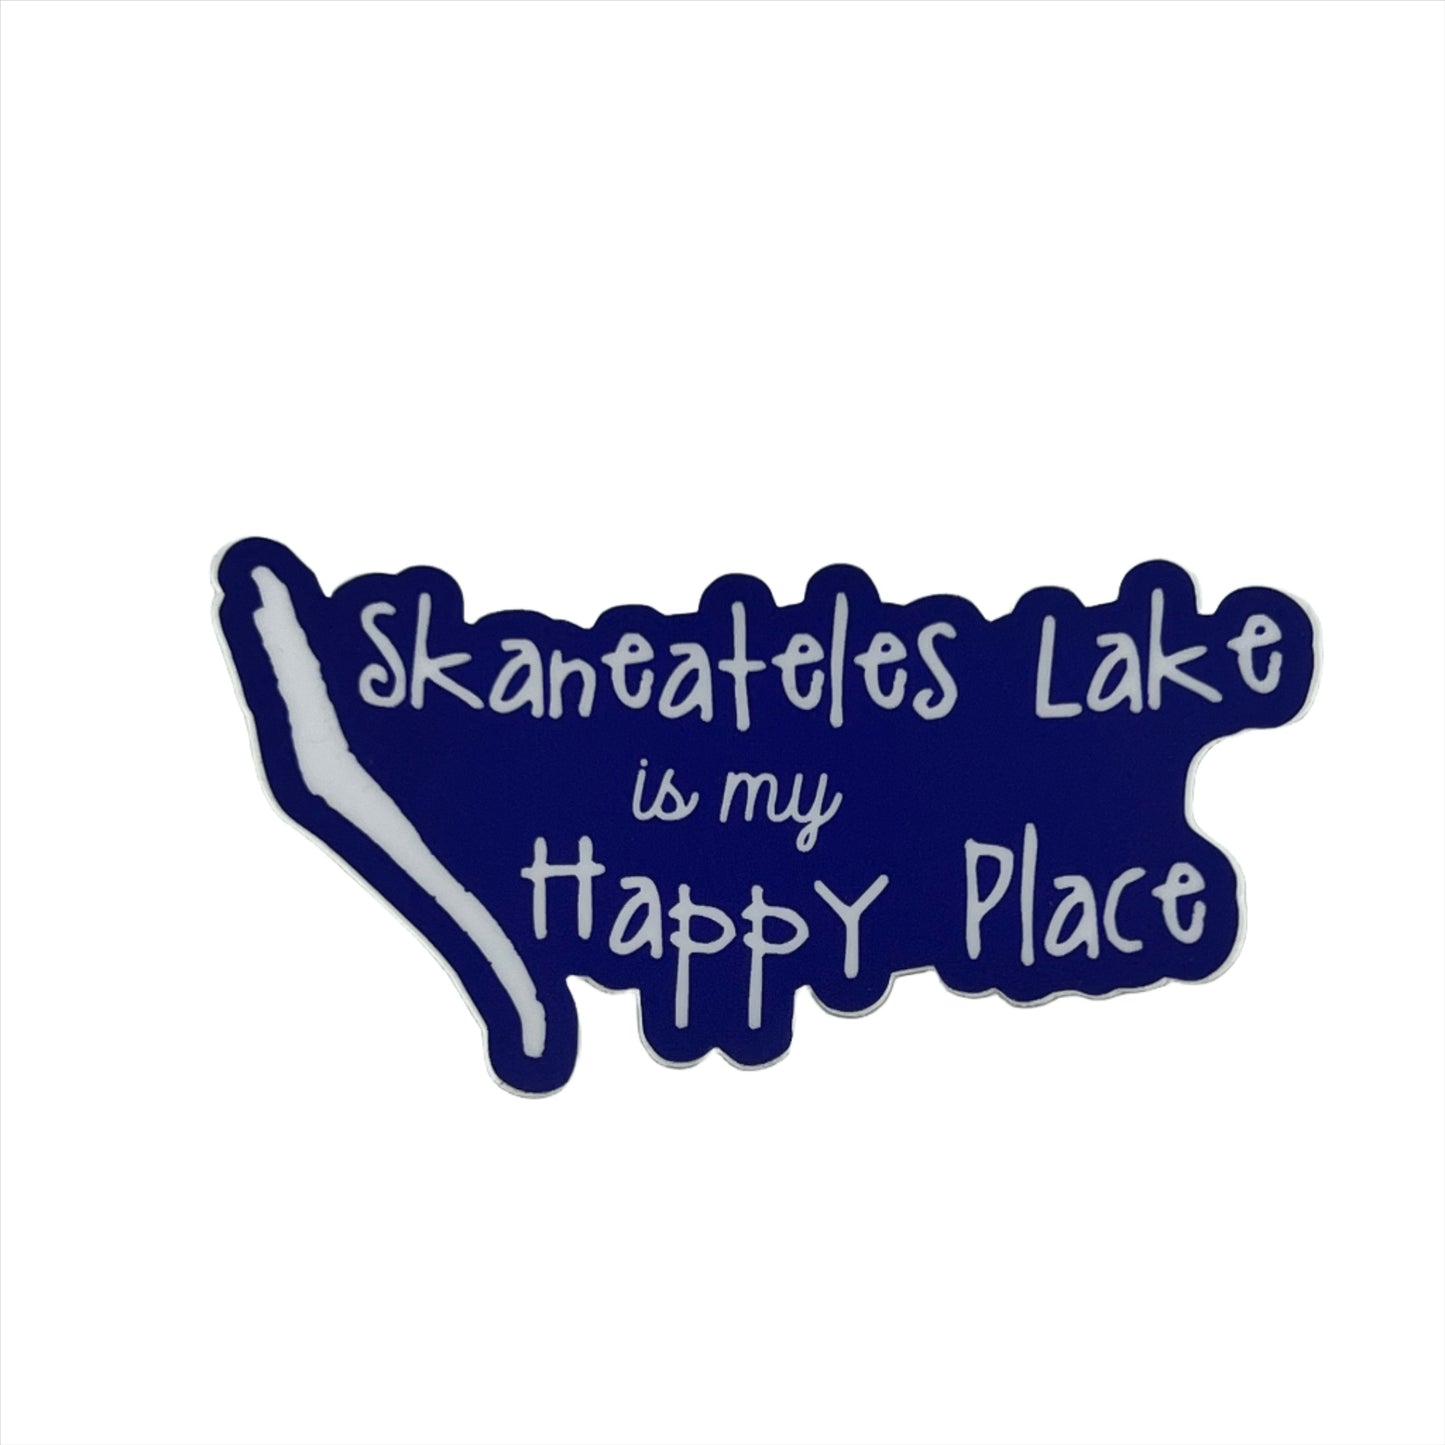 Skaneateles Lake is my Happy Place sticker